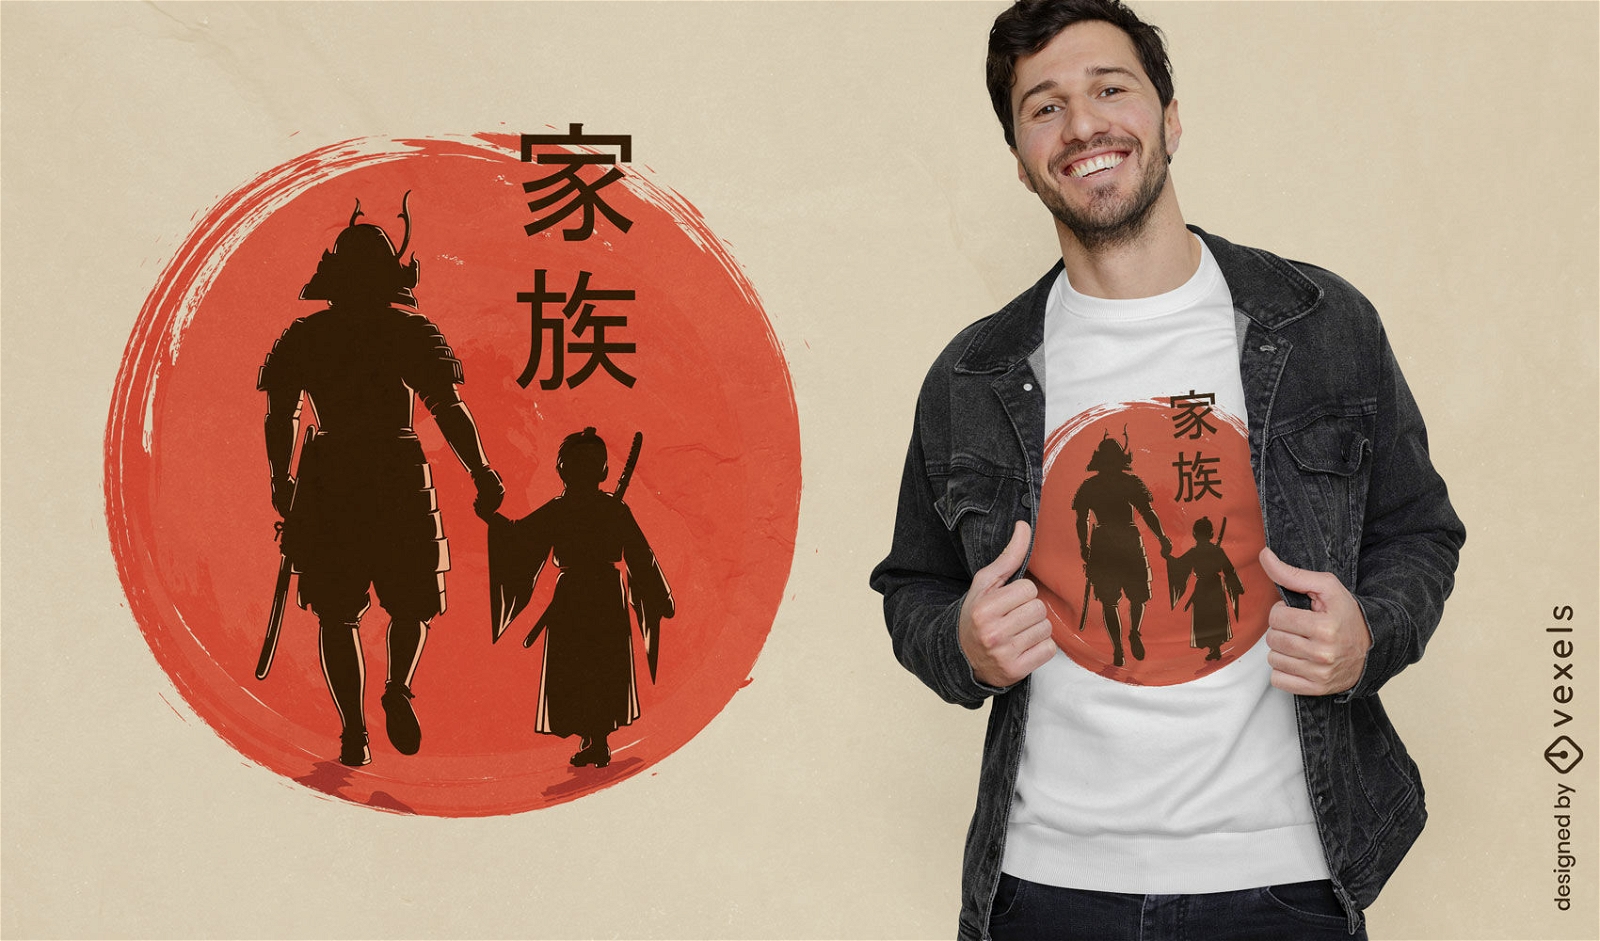 Samurai father and son t-shirt design